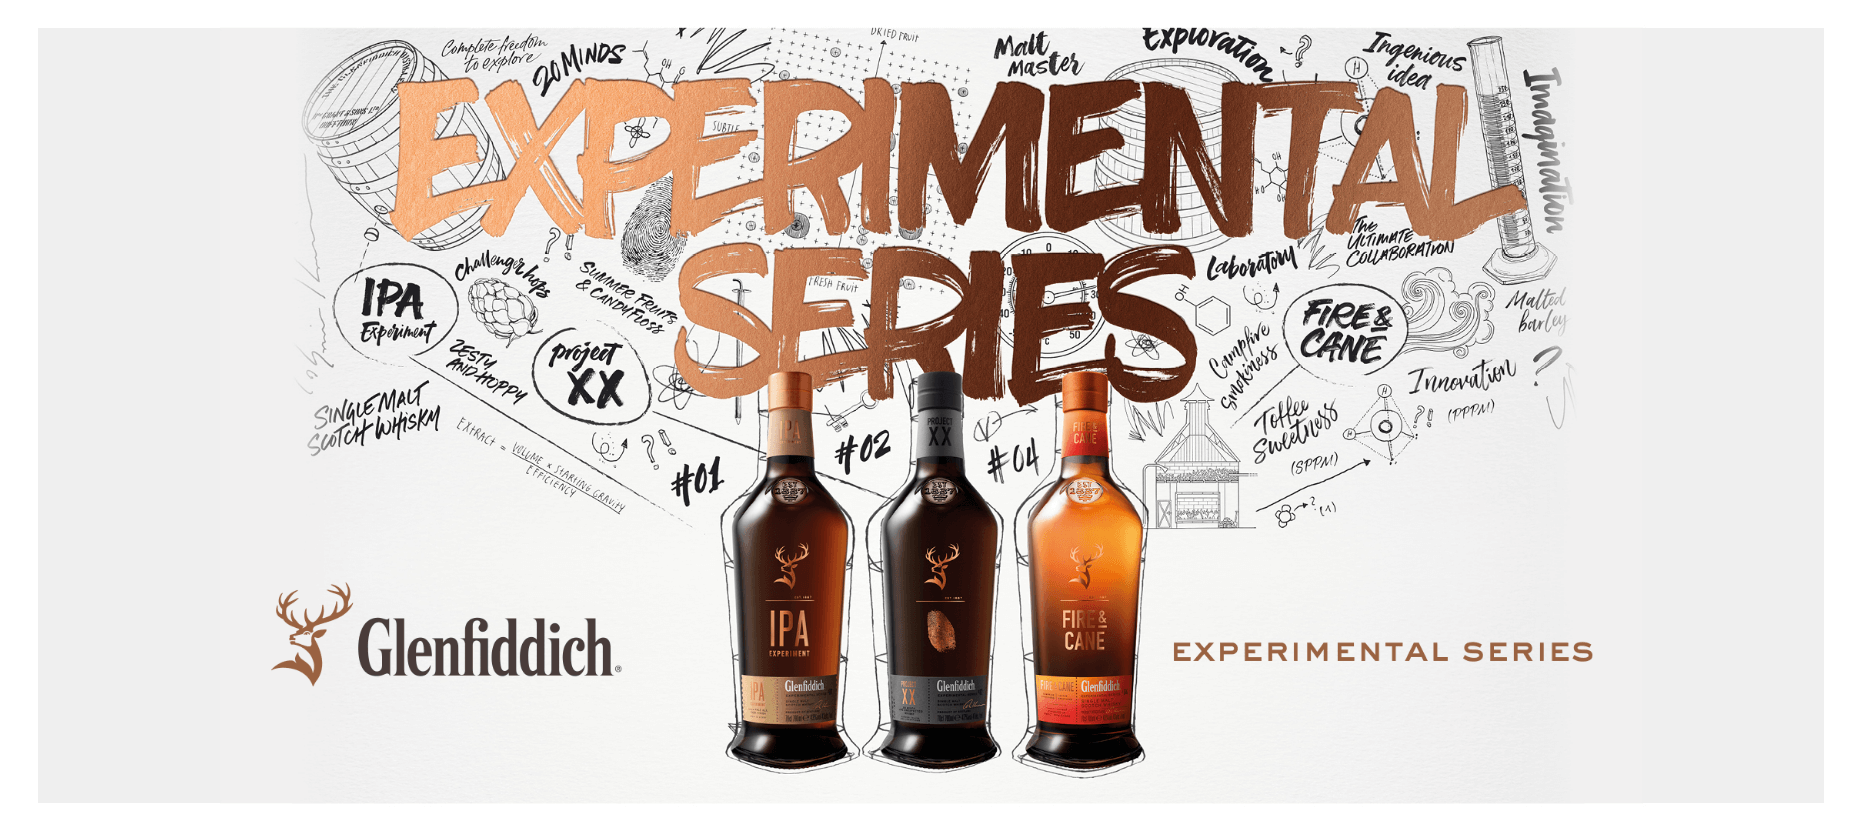 Glenfiddich Whisky Experimental Series